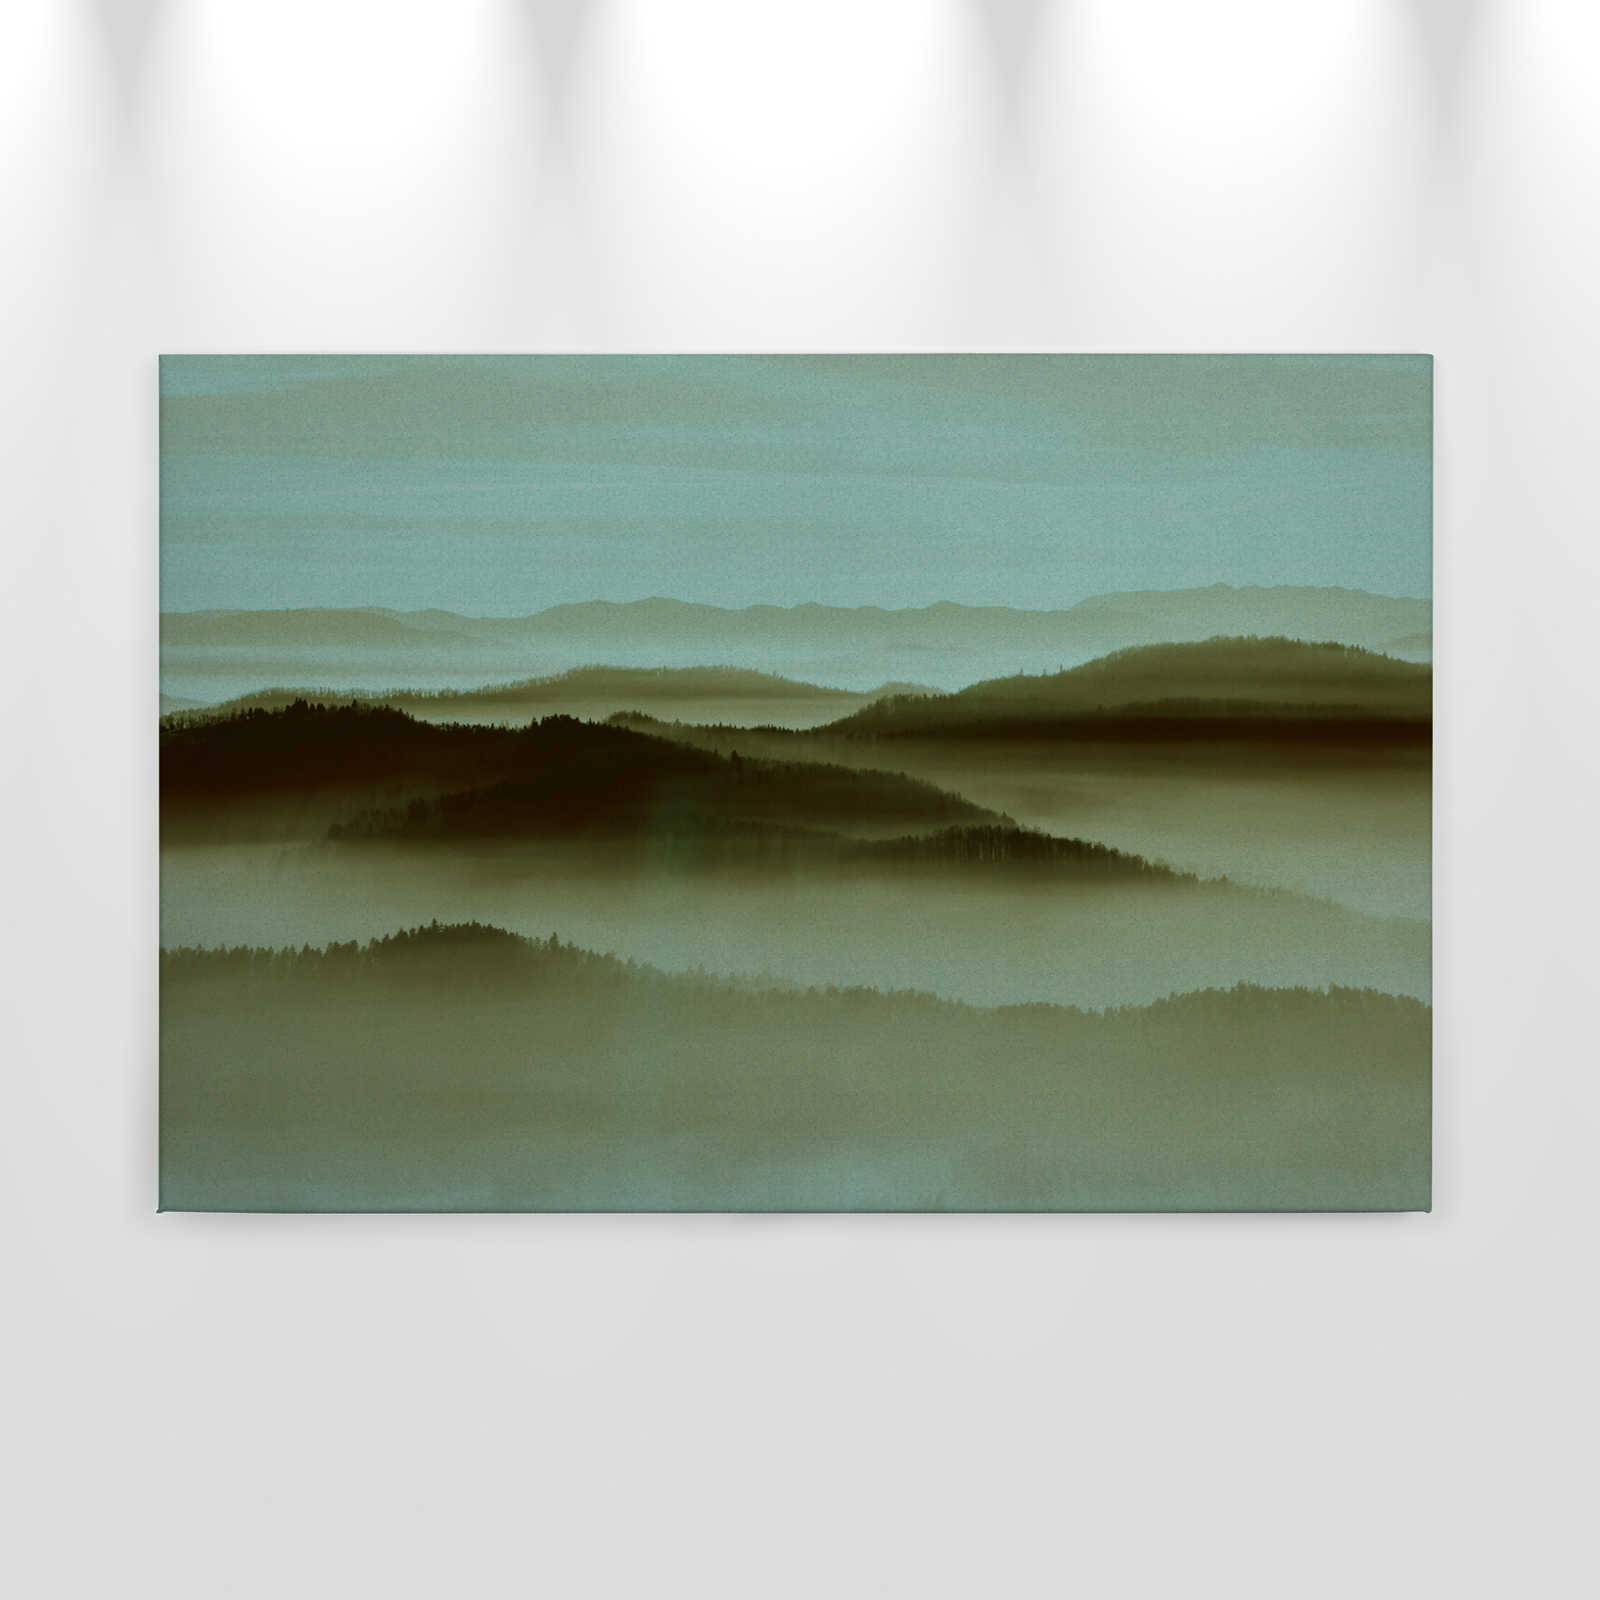             Horizon 2 - Leinwandbild in Pappe Struktur mit Nebel-Landschaft, Natur Sky Line – 0,90 m x 0,60 m
        